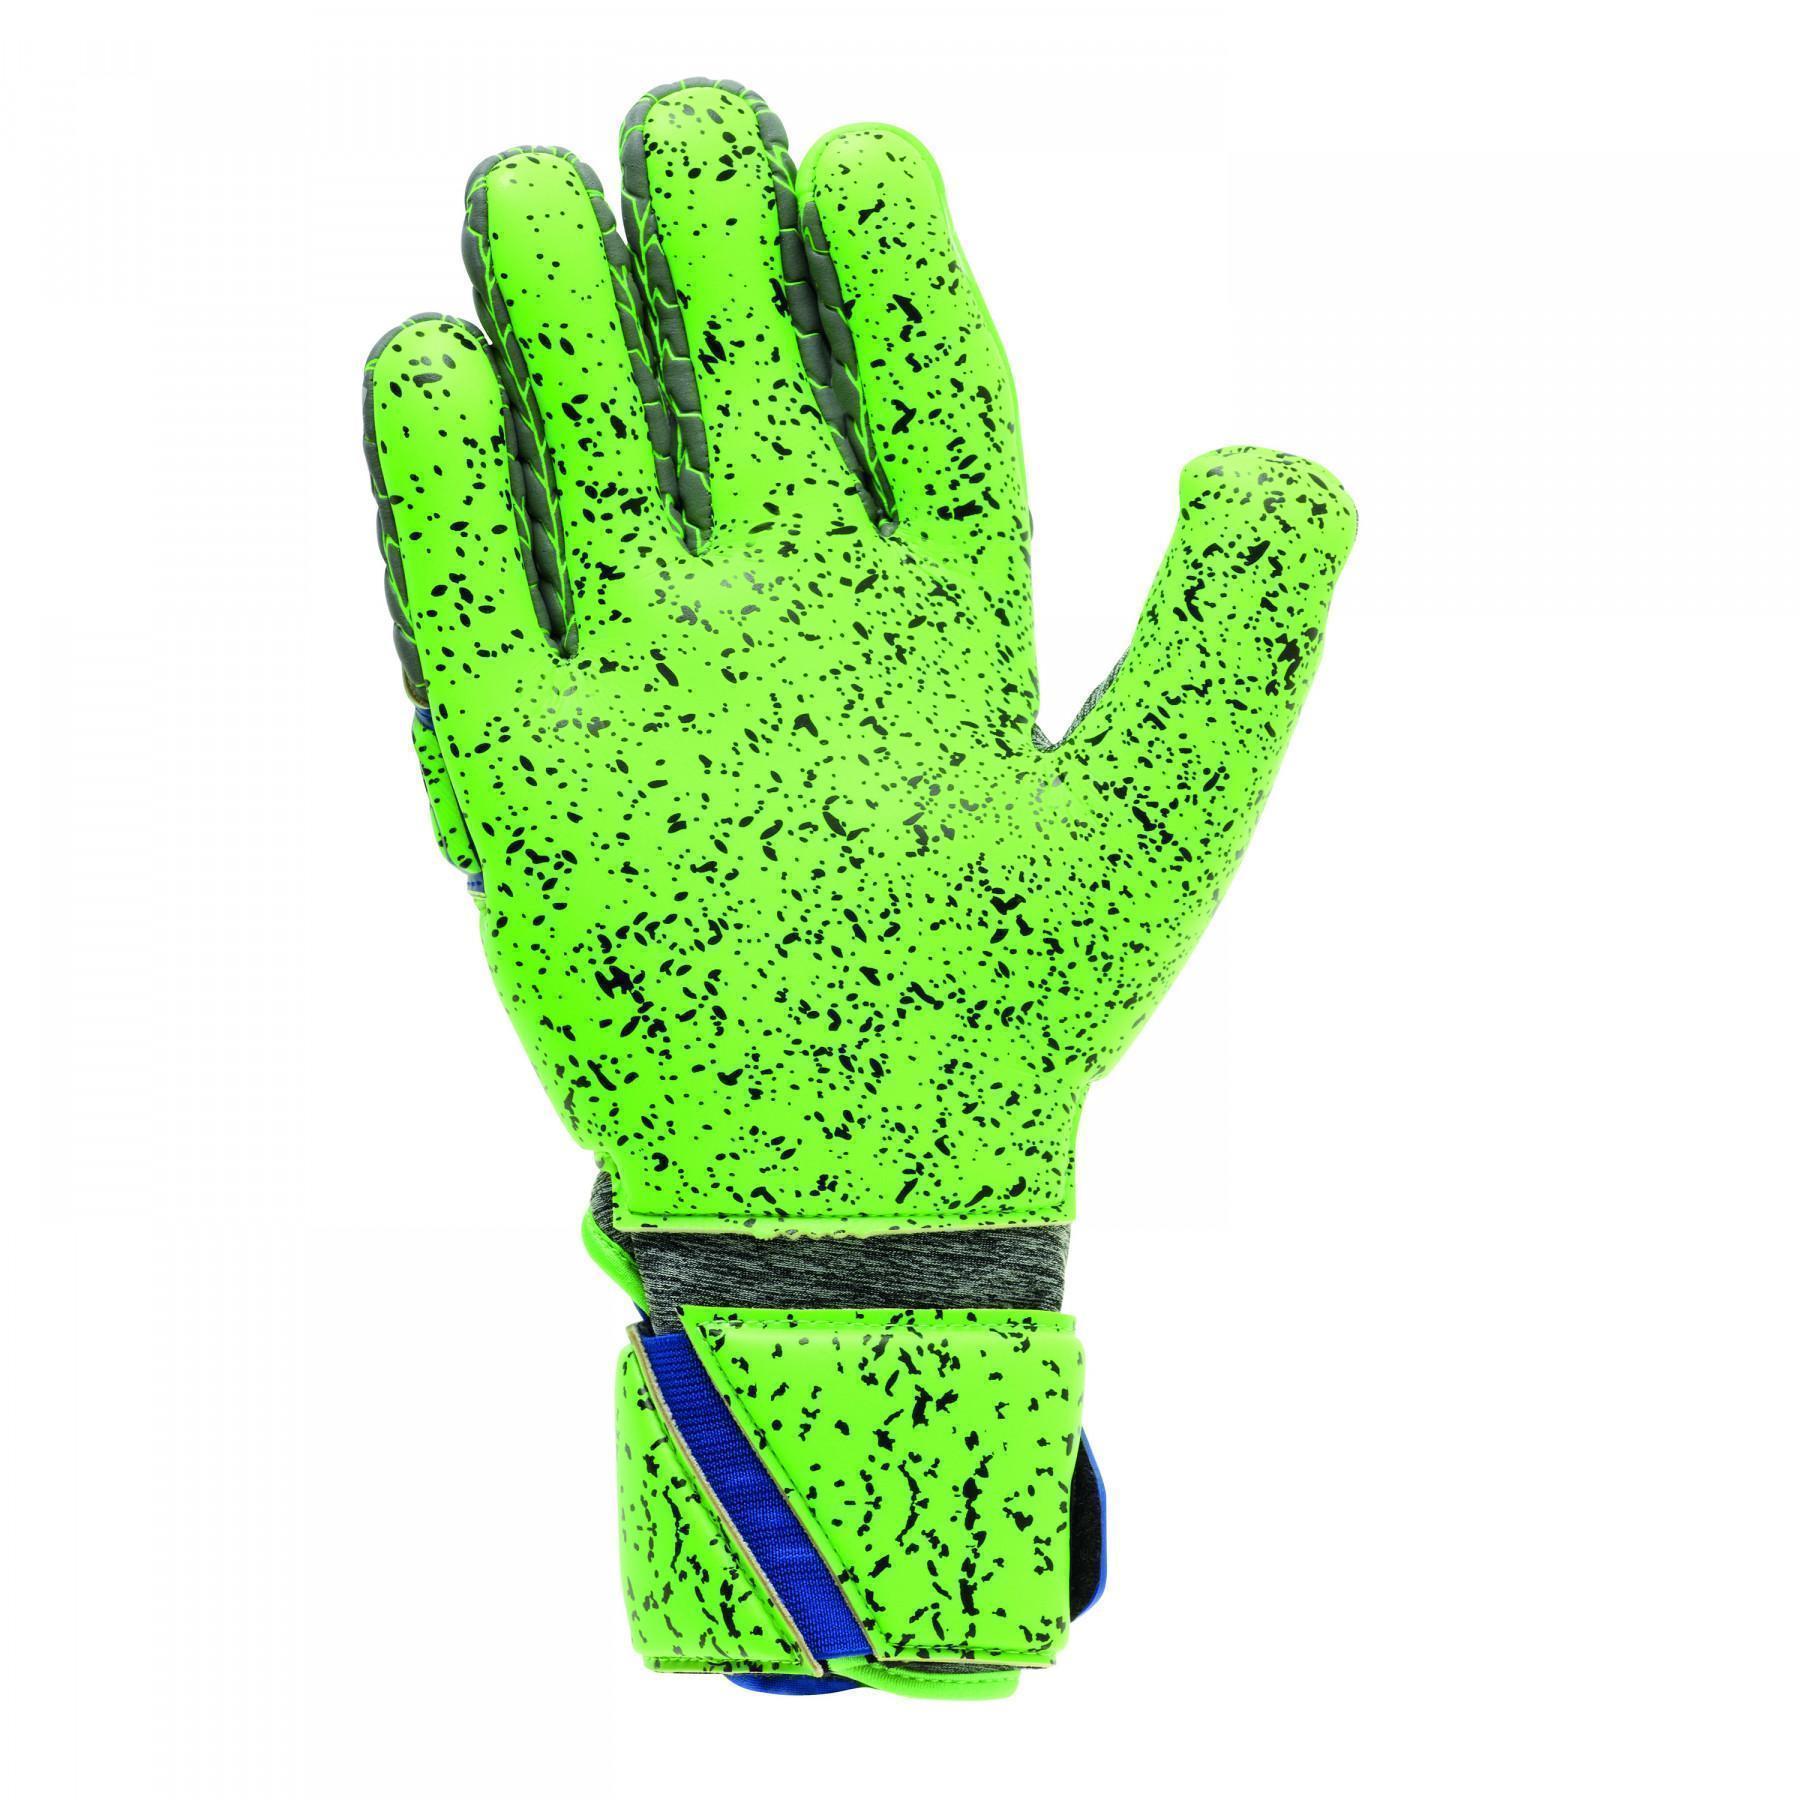 Goalkeeper gloves Uhlsport Supergrip Reflex Tensiongreen